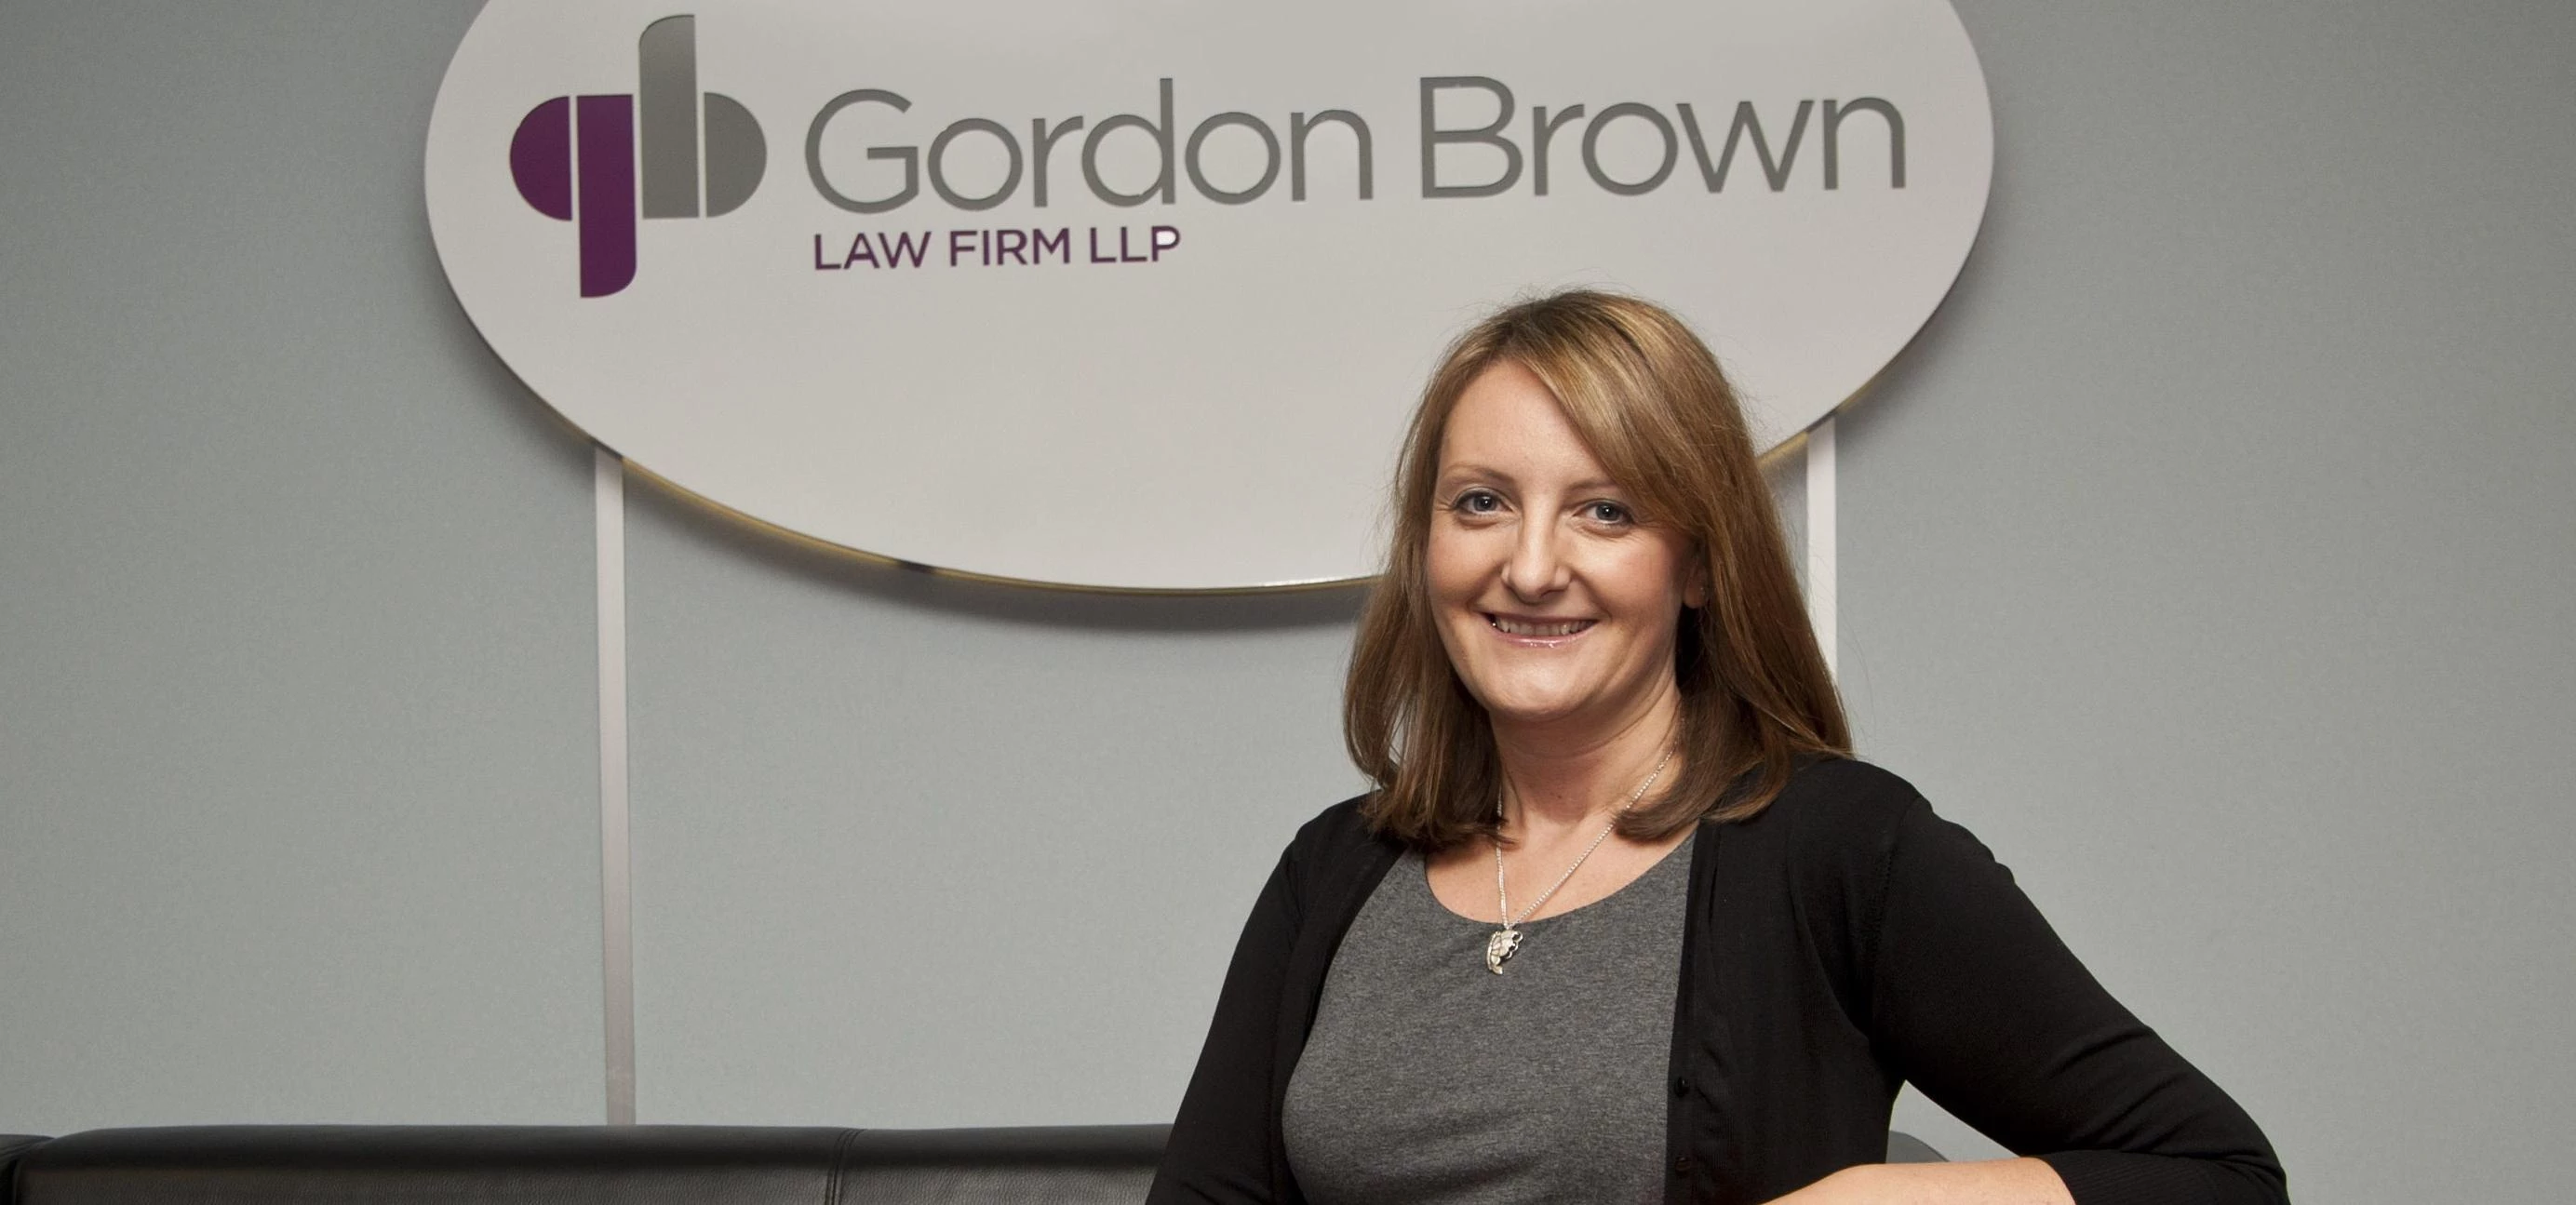 Kathryn Taylor, Managing Partner at Gordon Brown Law Firm